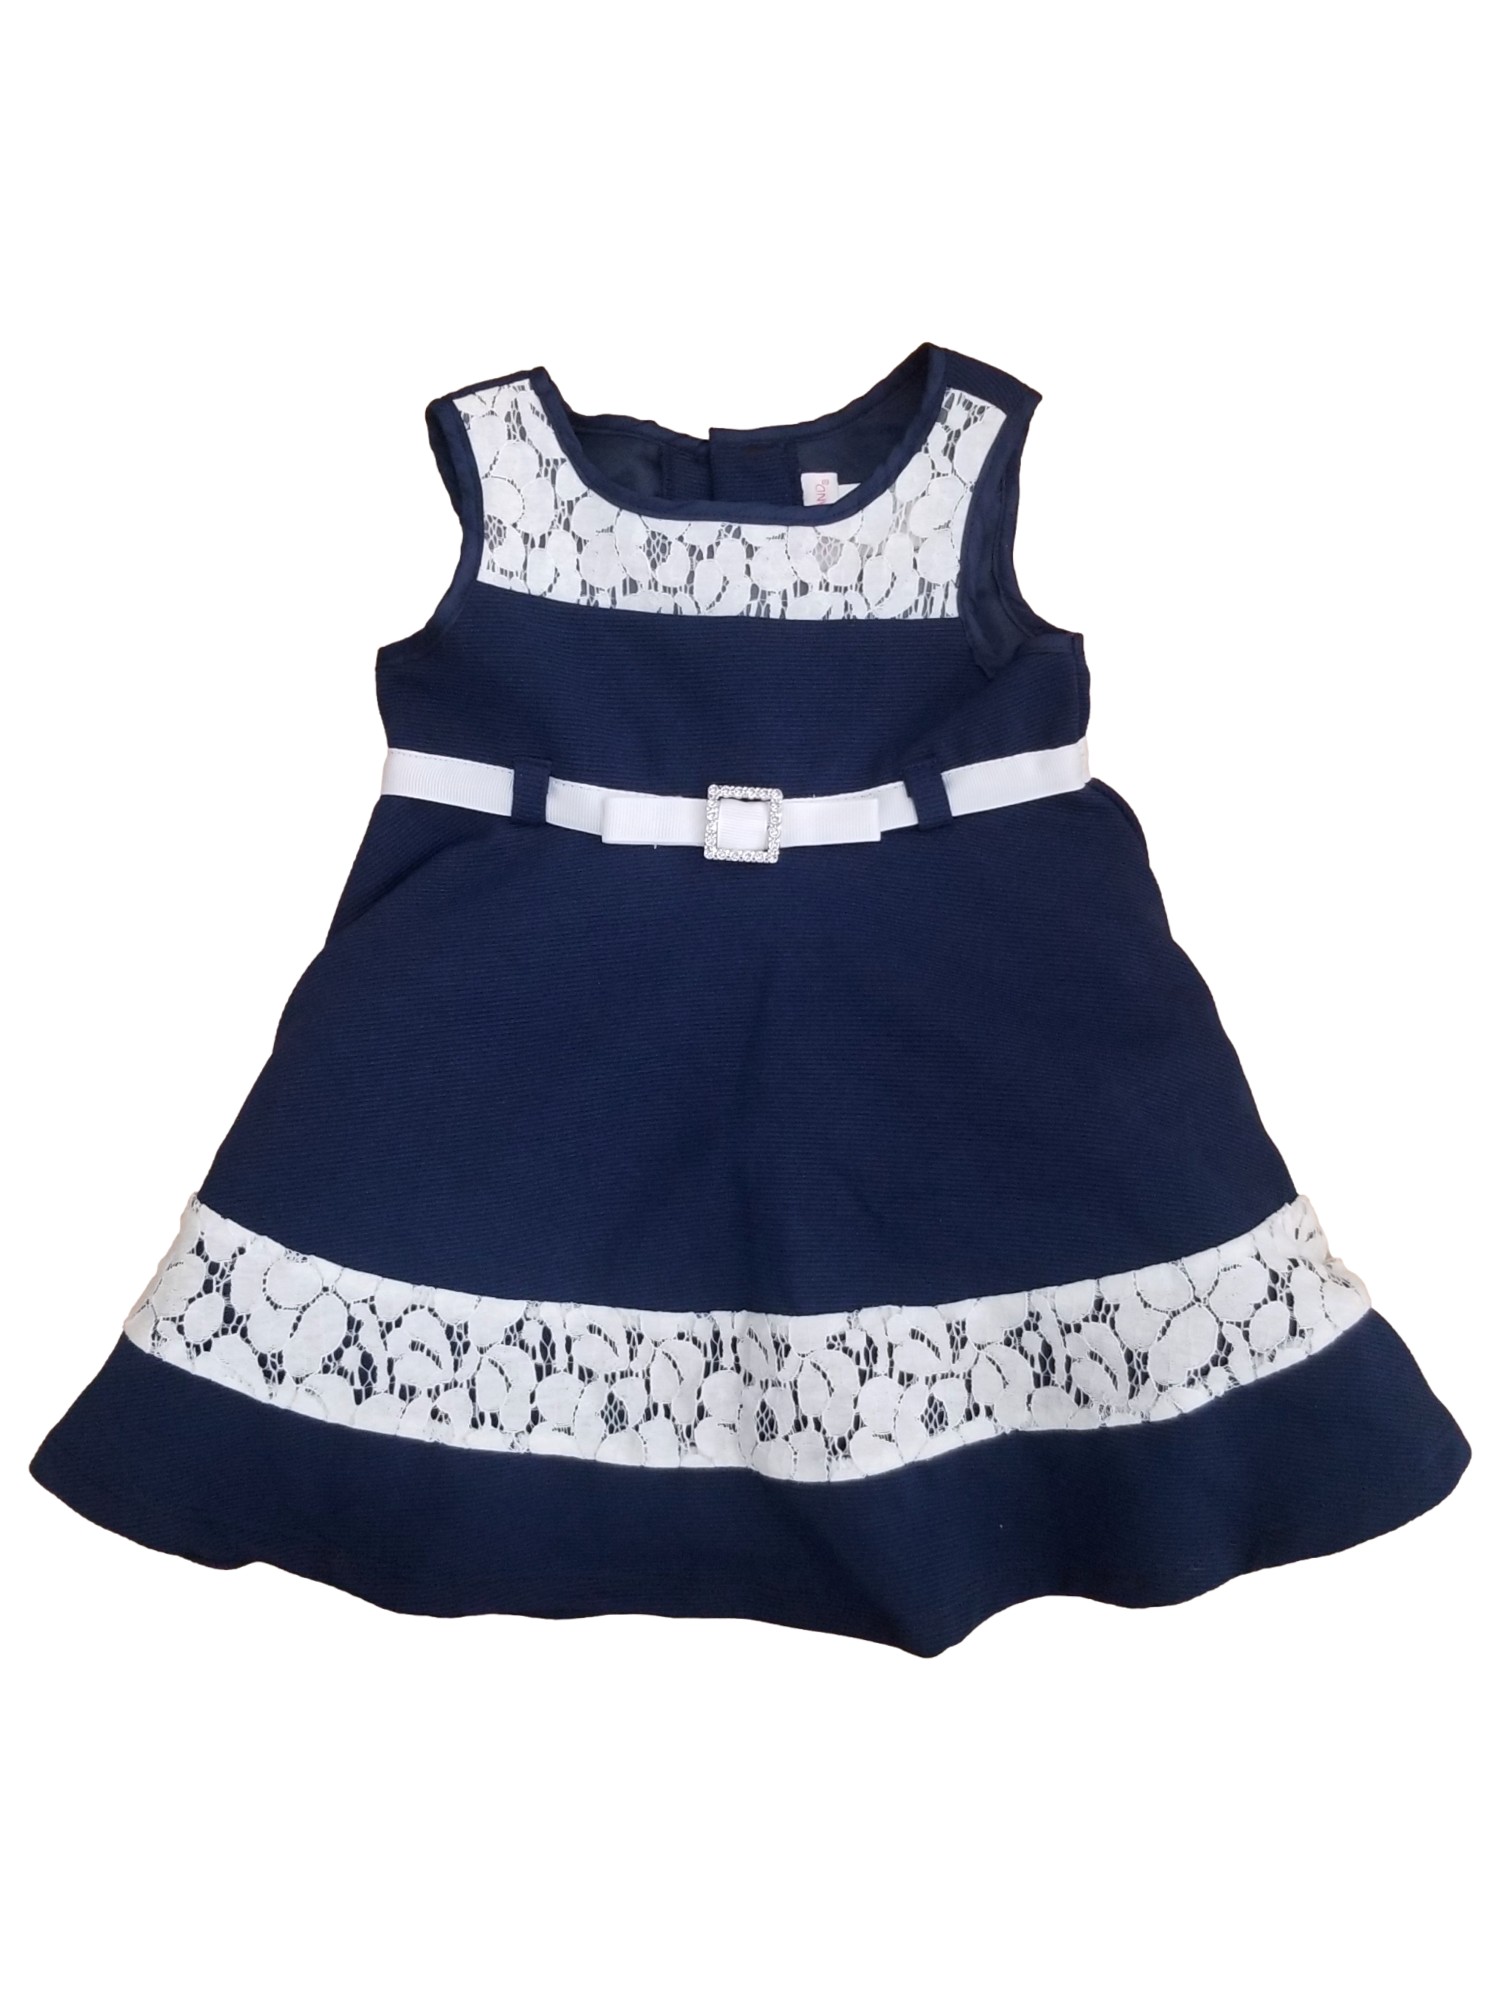 Youngland Infant Girls Navy Blue & White Lace Sleeveless Dress w/ Panty 18m